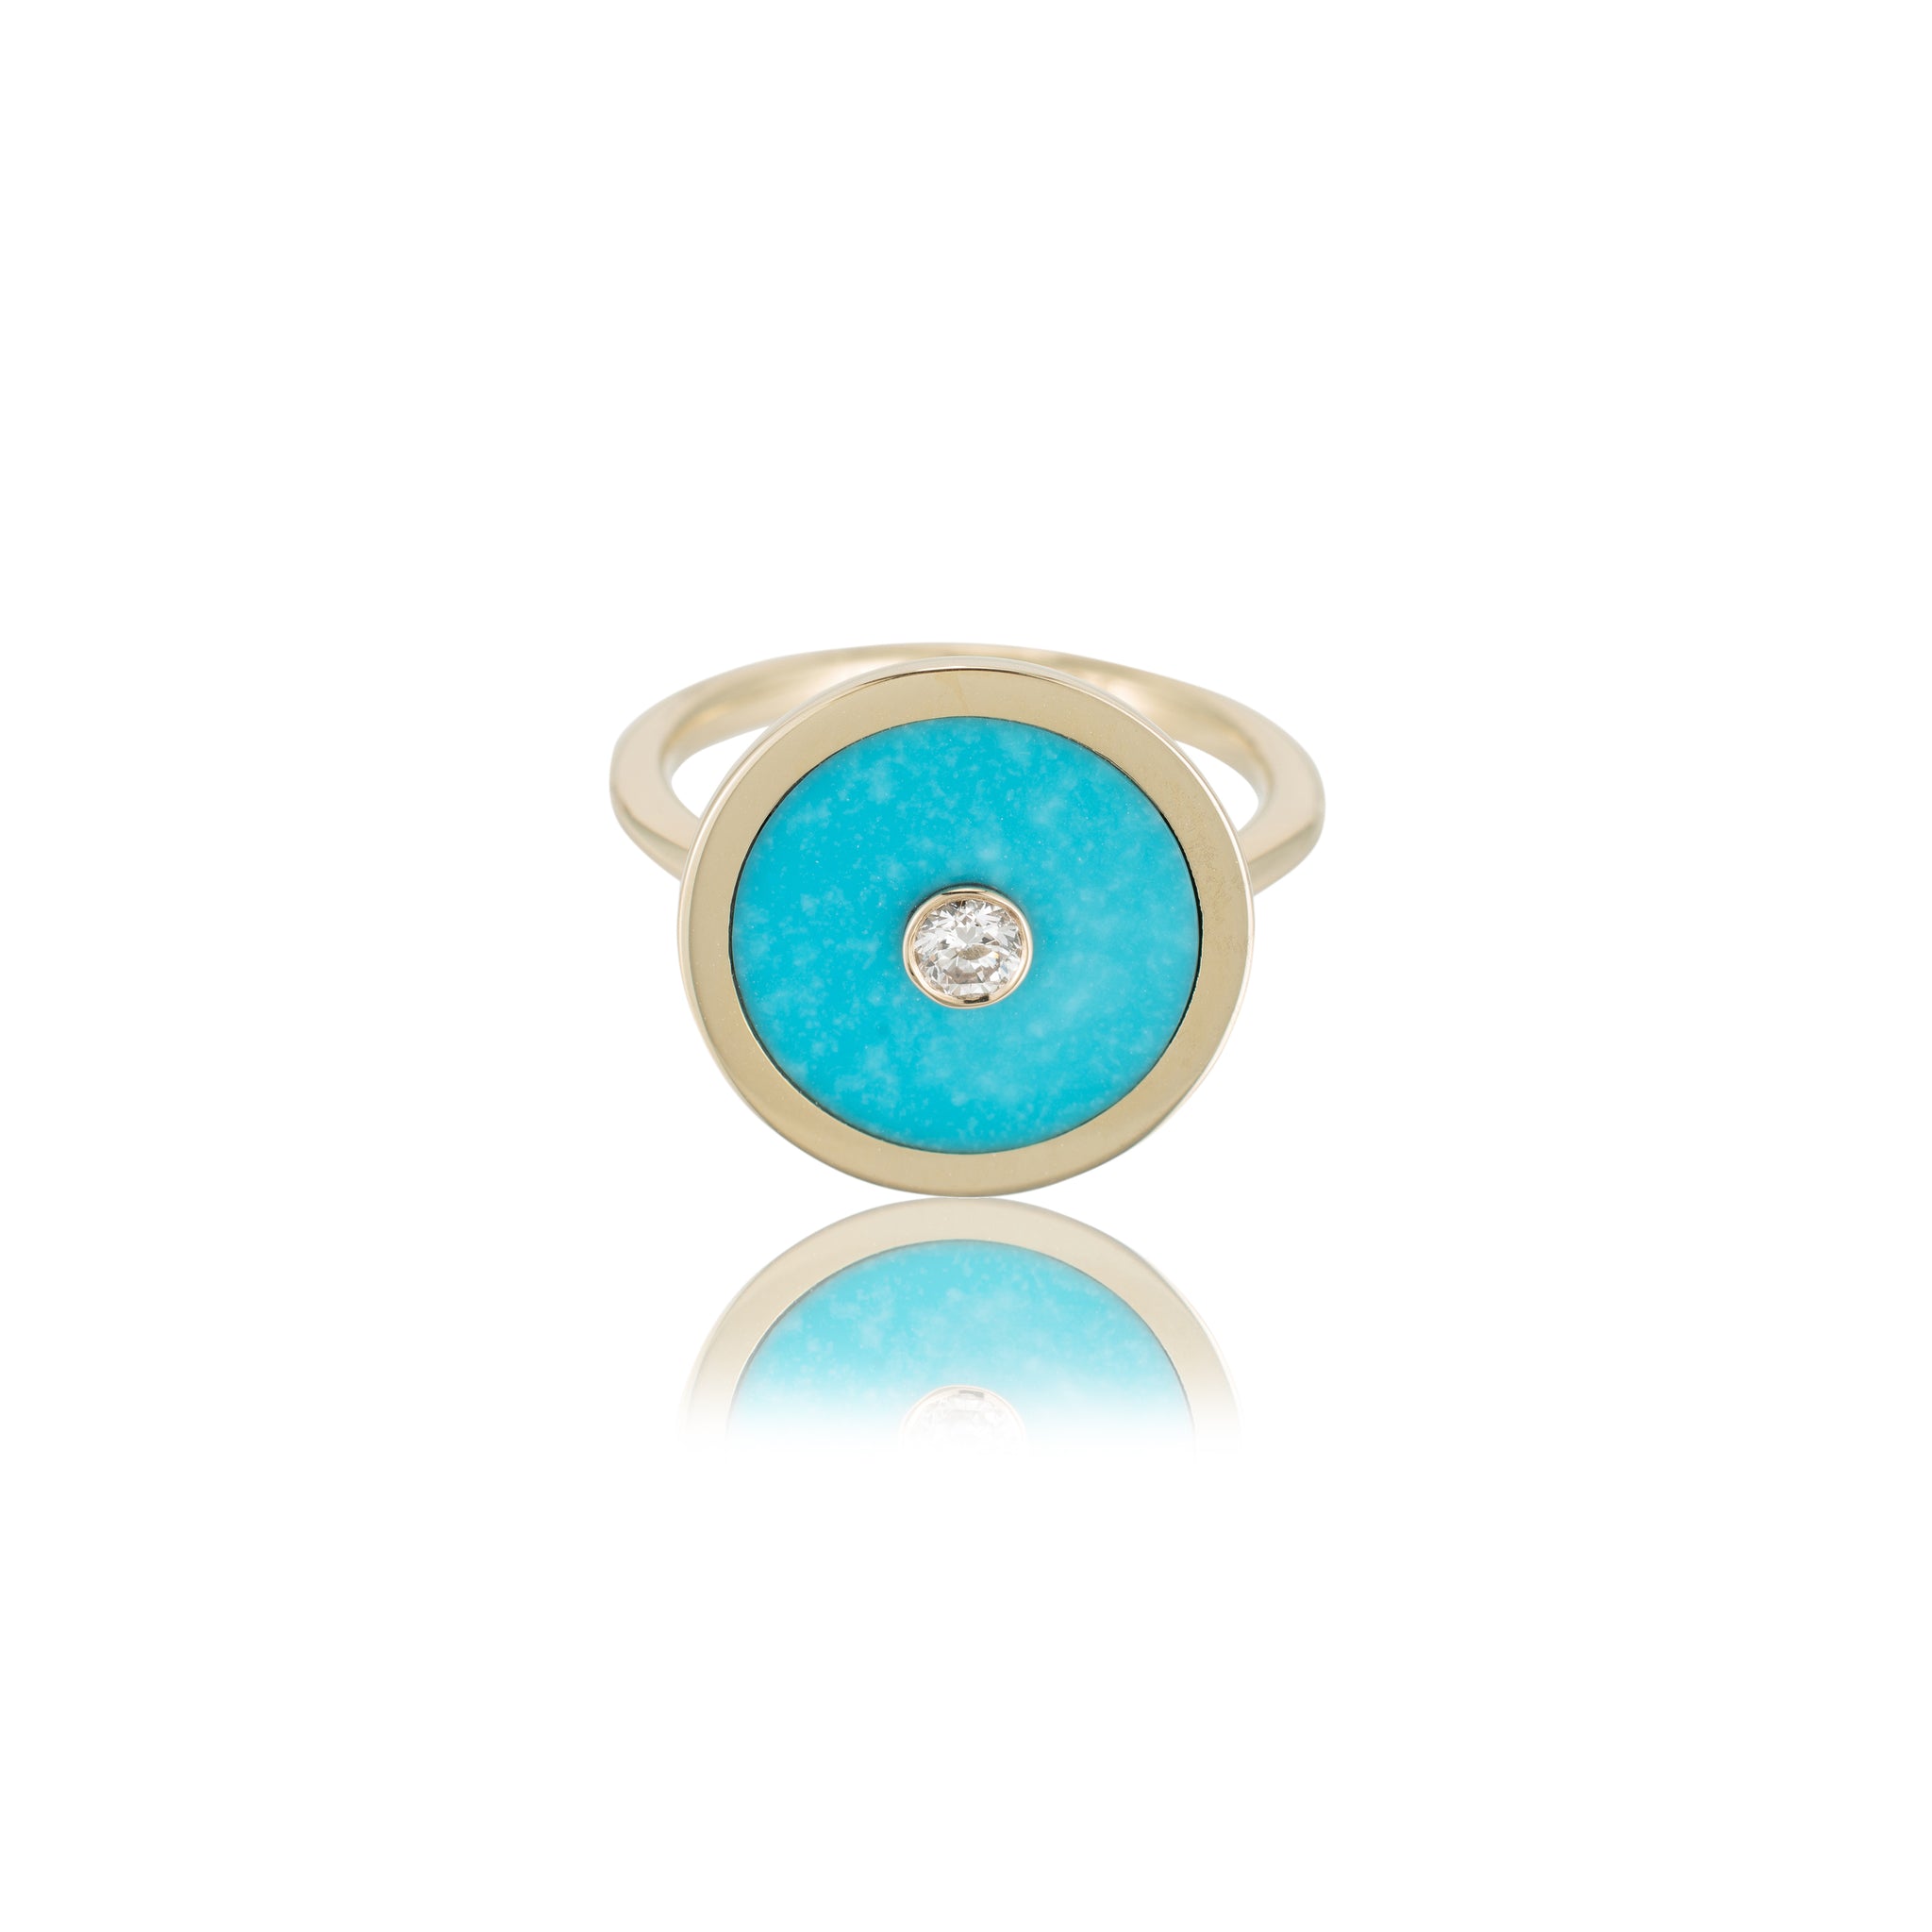 ali grace jewelry turquoise inlay ring like retrouvai fine jewelry handmade in nyc